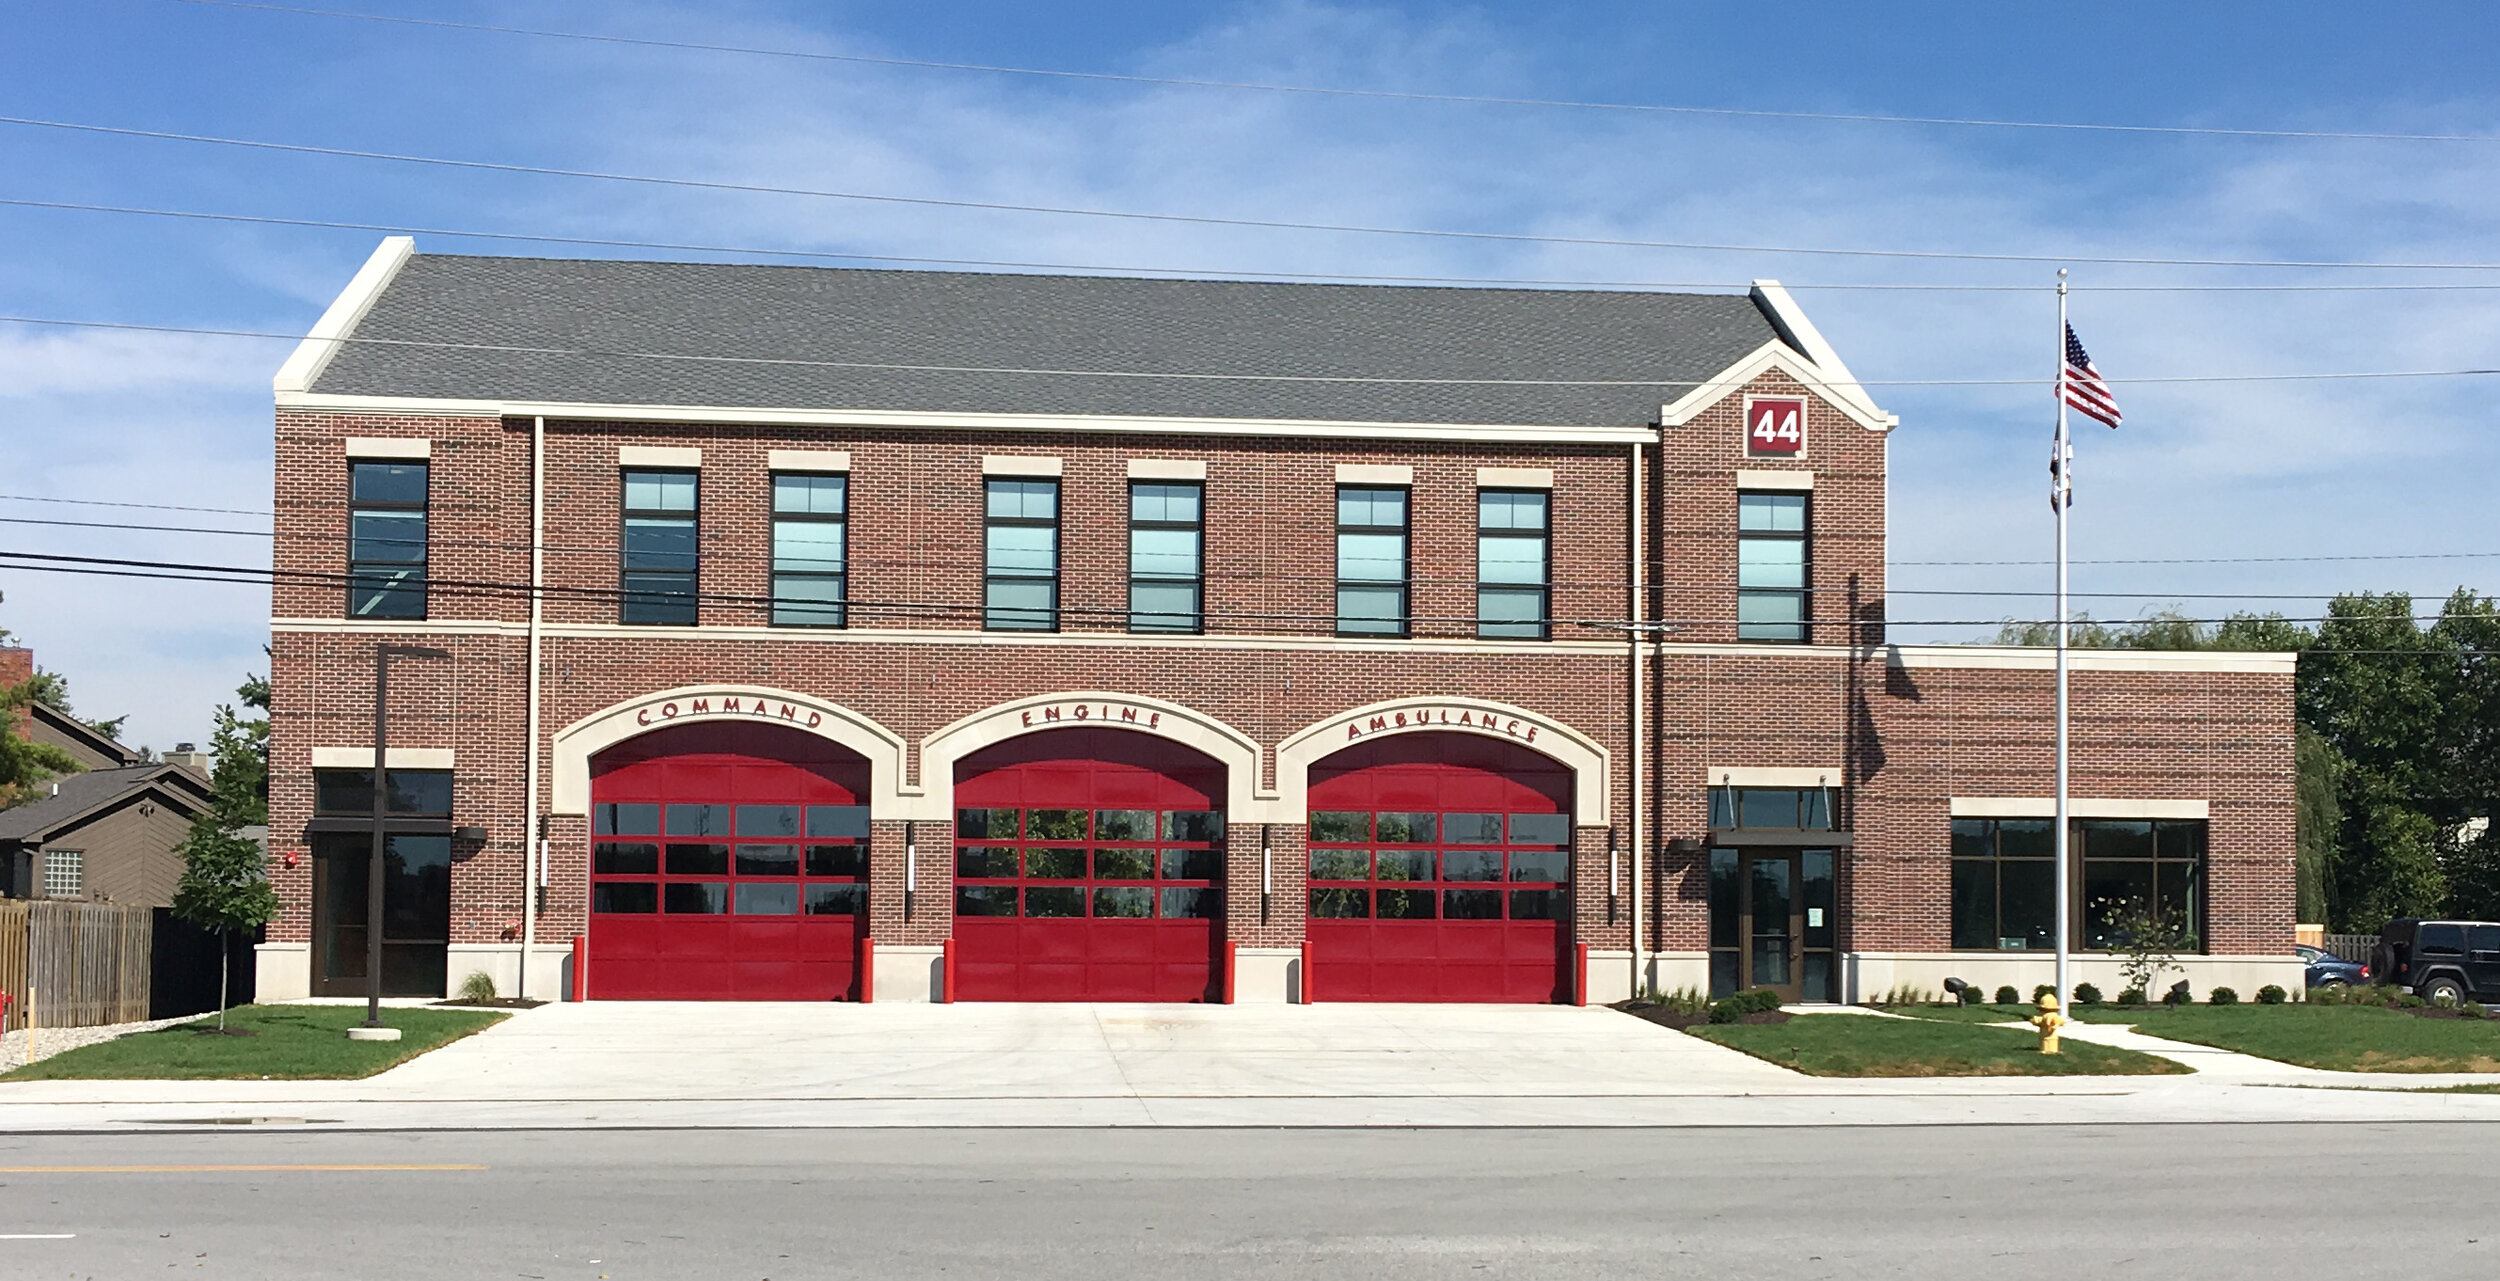 Carmel Fire Station #44